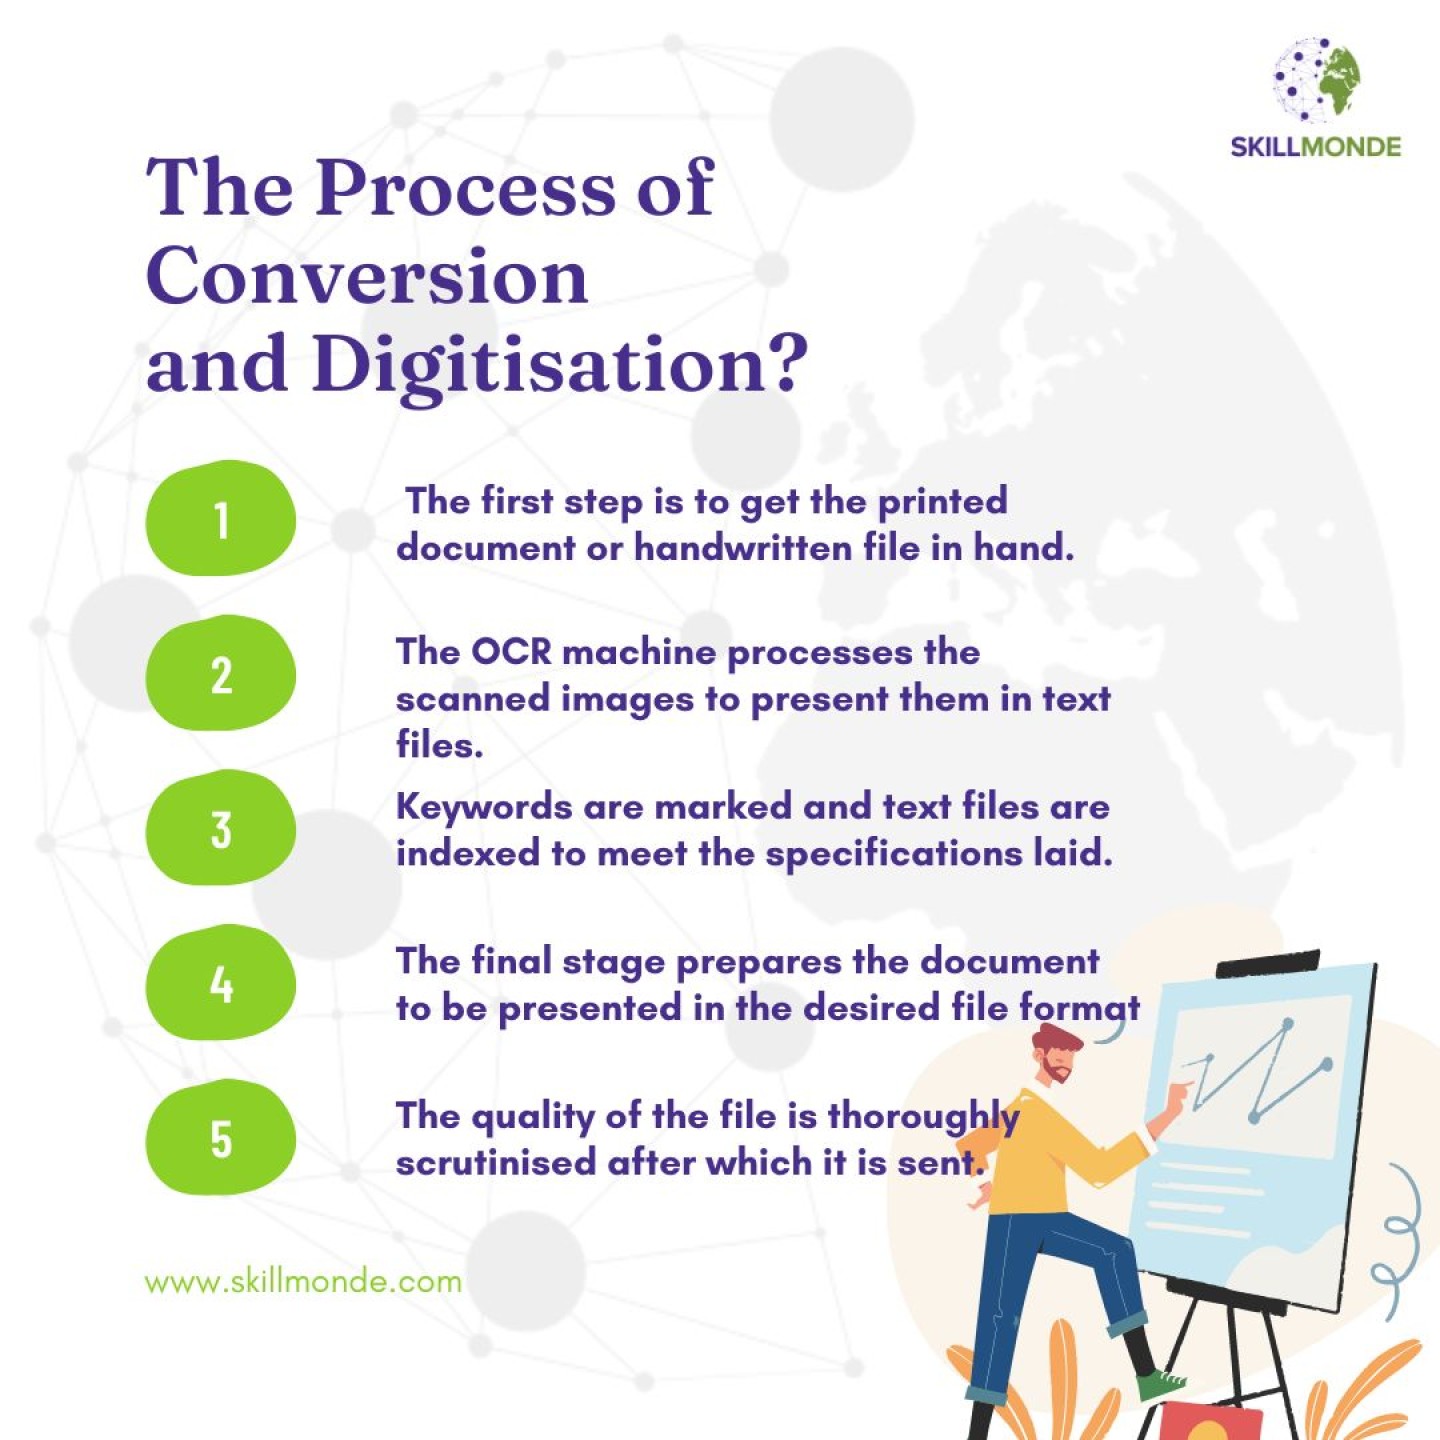 conversion and digitisation2 - skillmonde